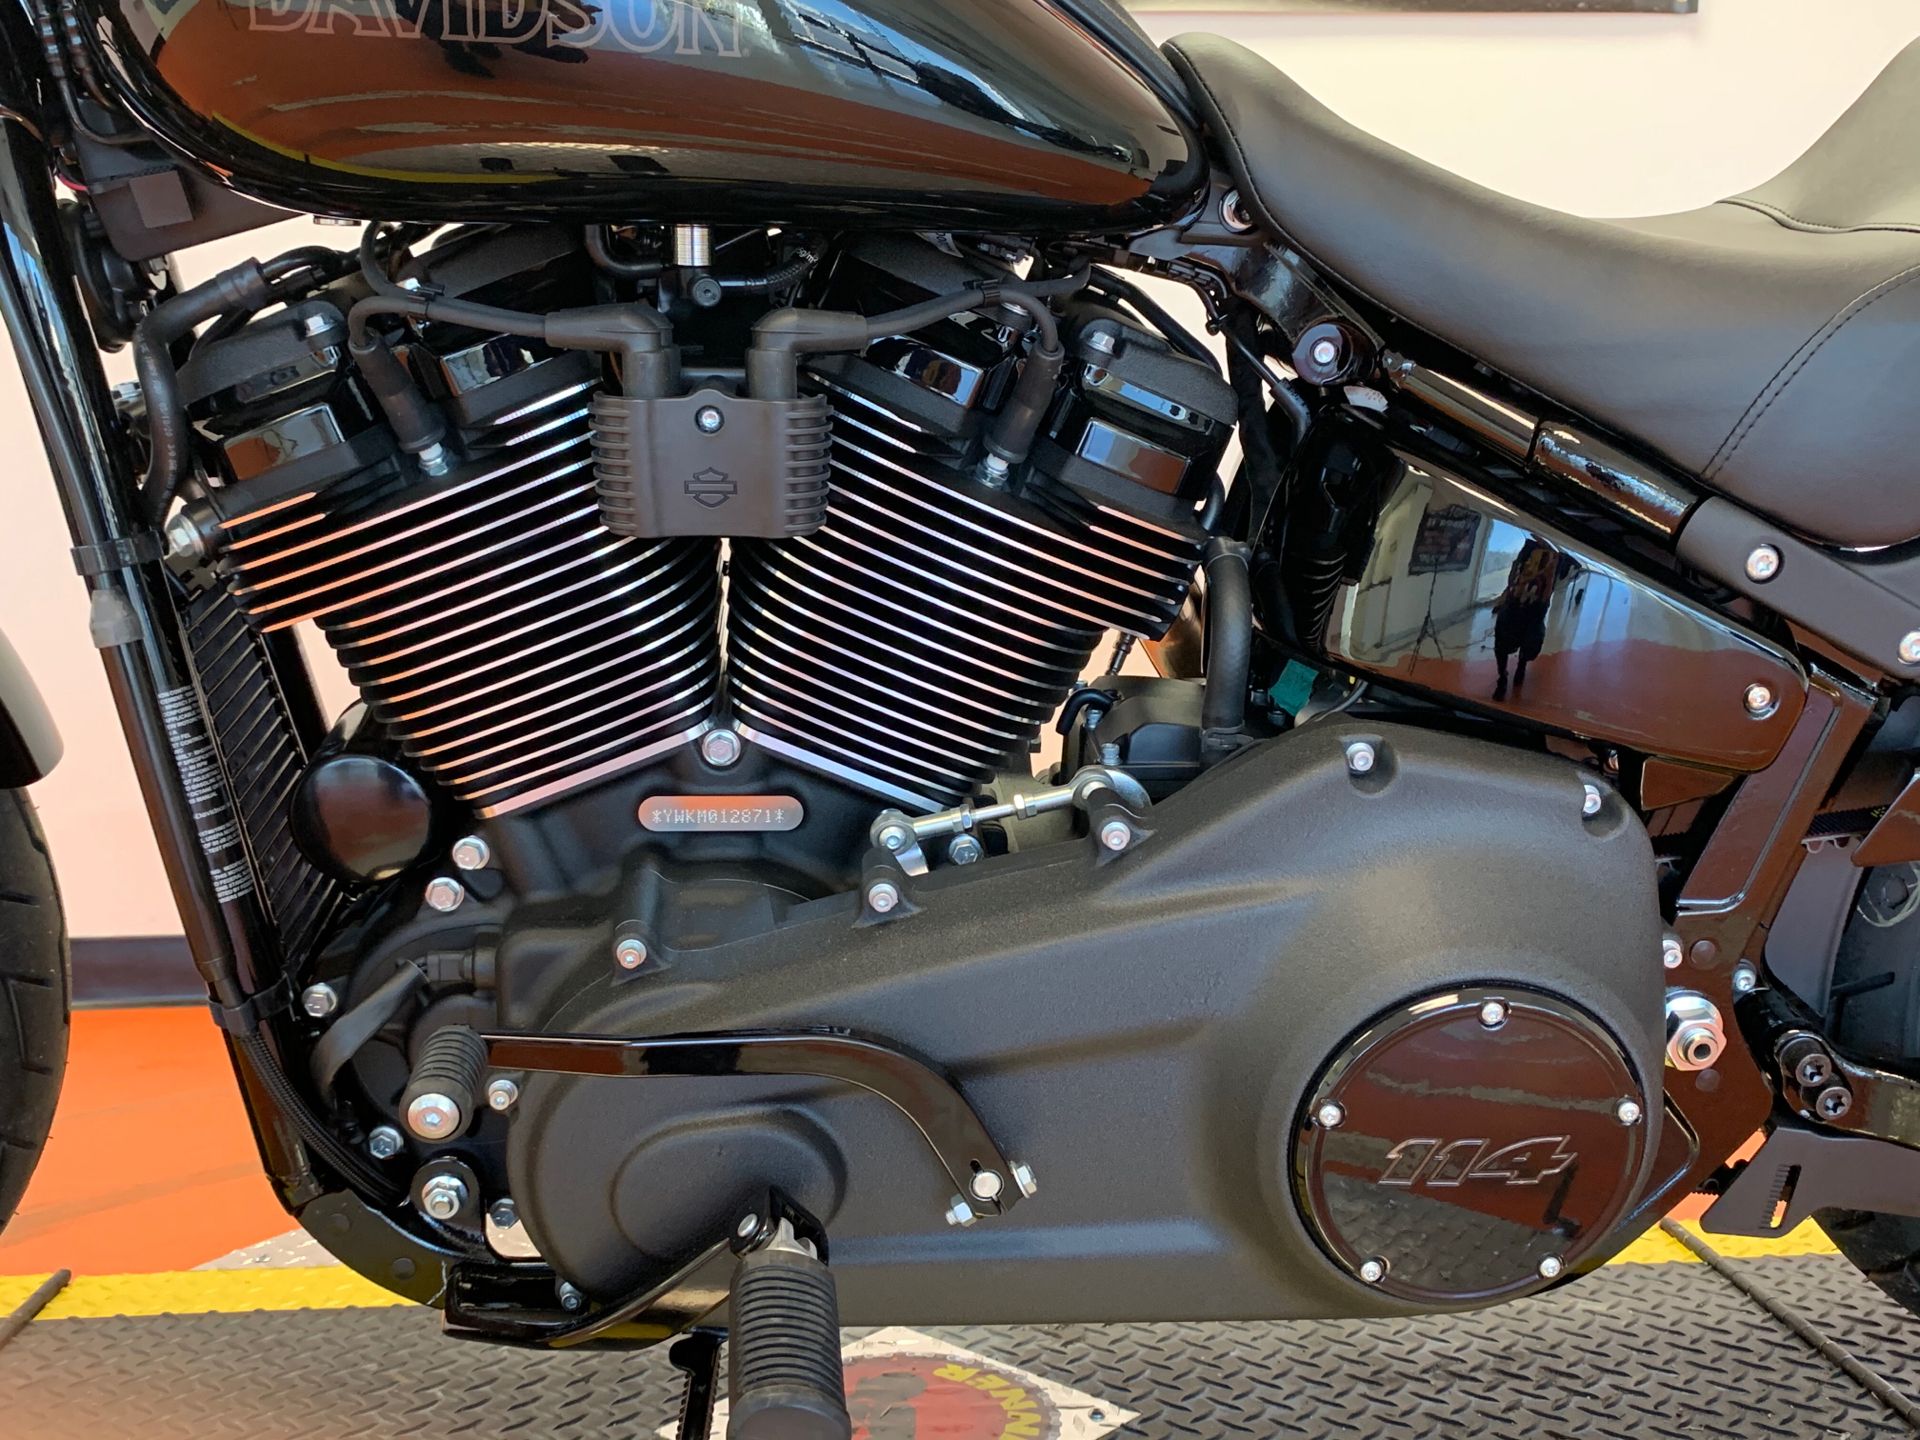 2021 Harley-Davidson Low Rider S Engine Via Harley-Davidson of Quantico